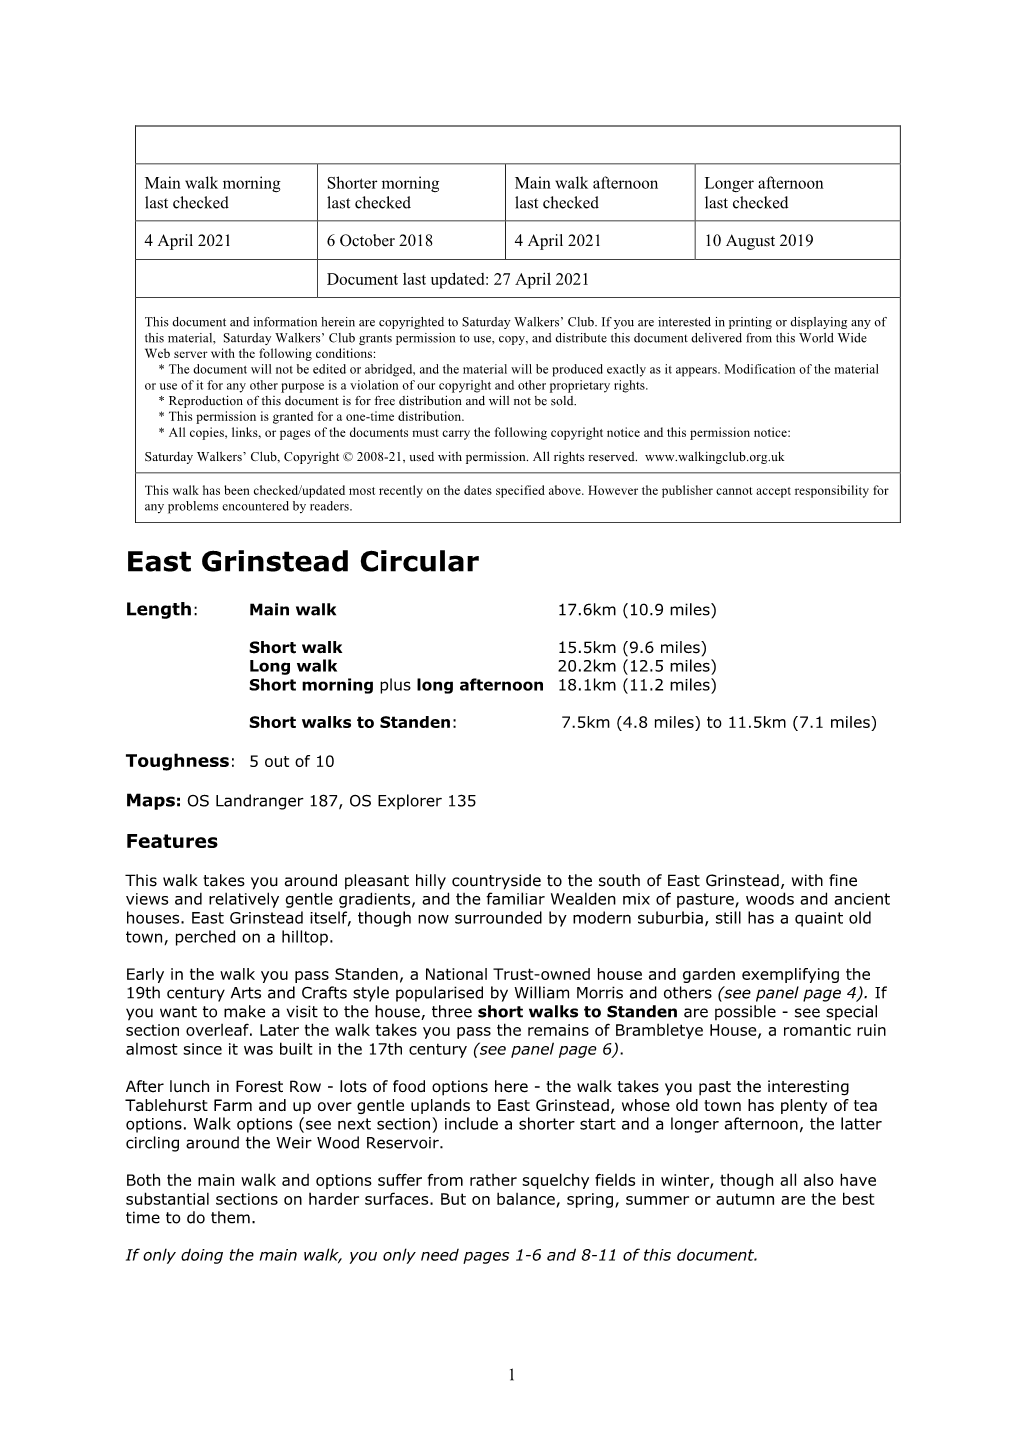 East Grinstead Circular Walk Directions